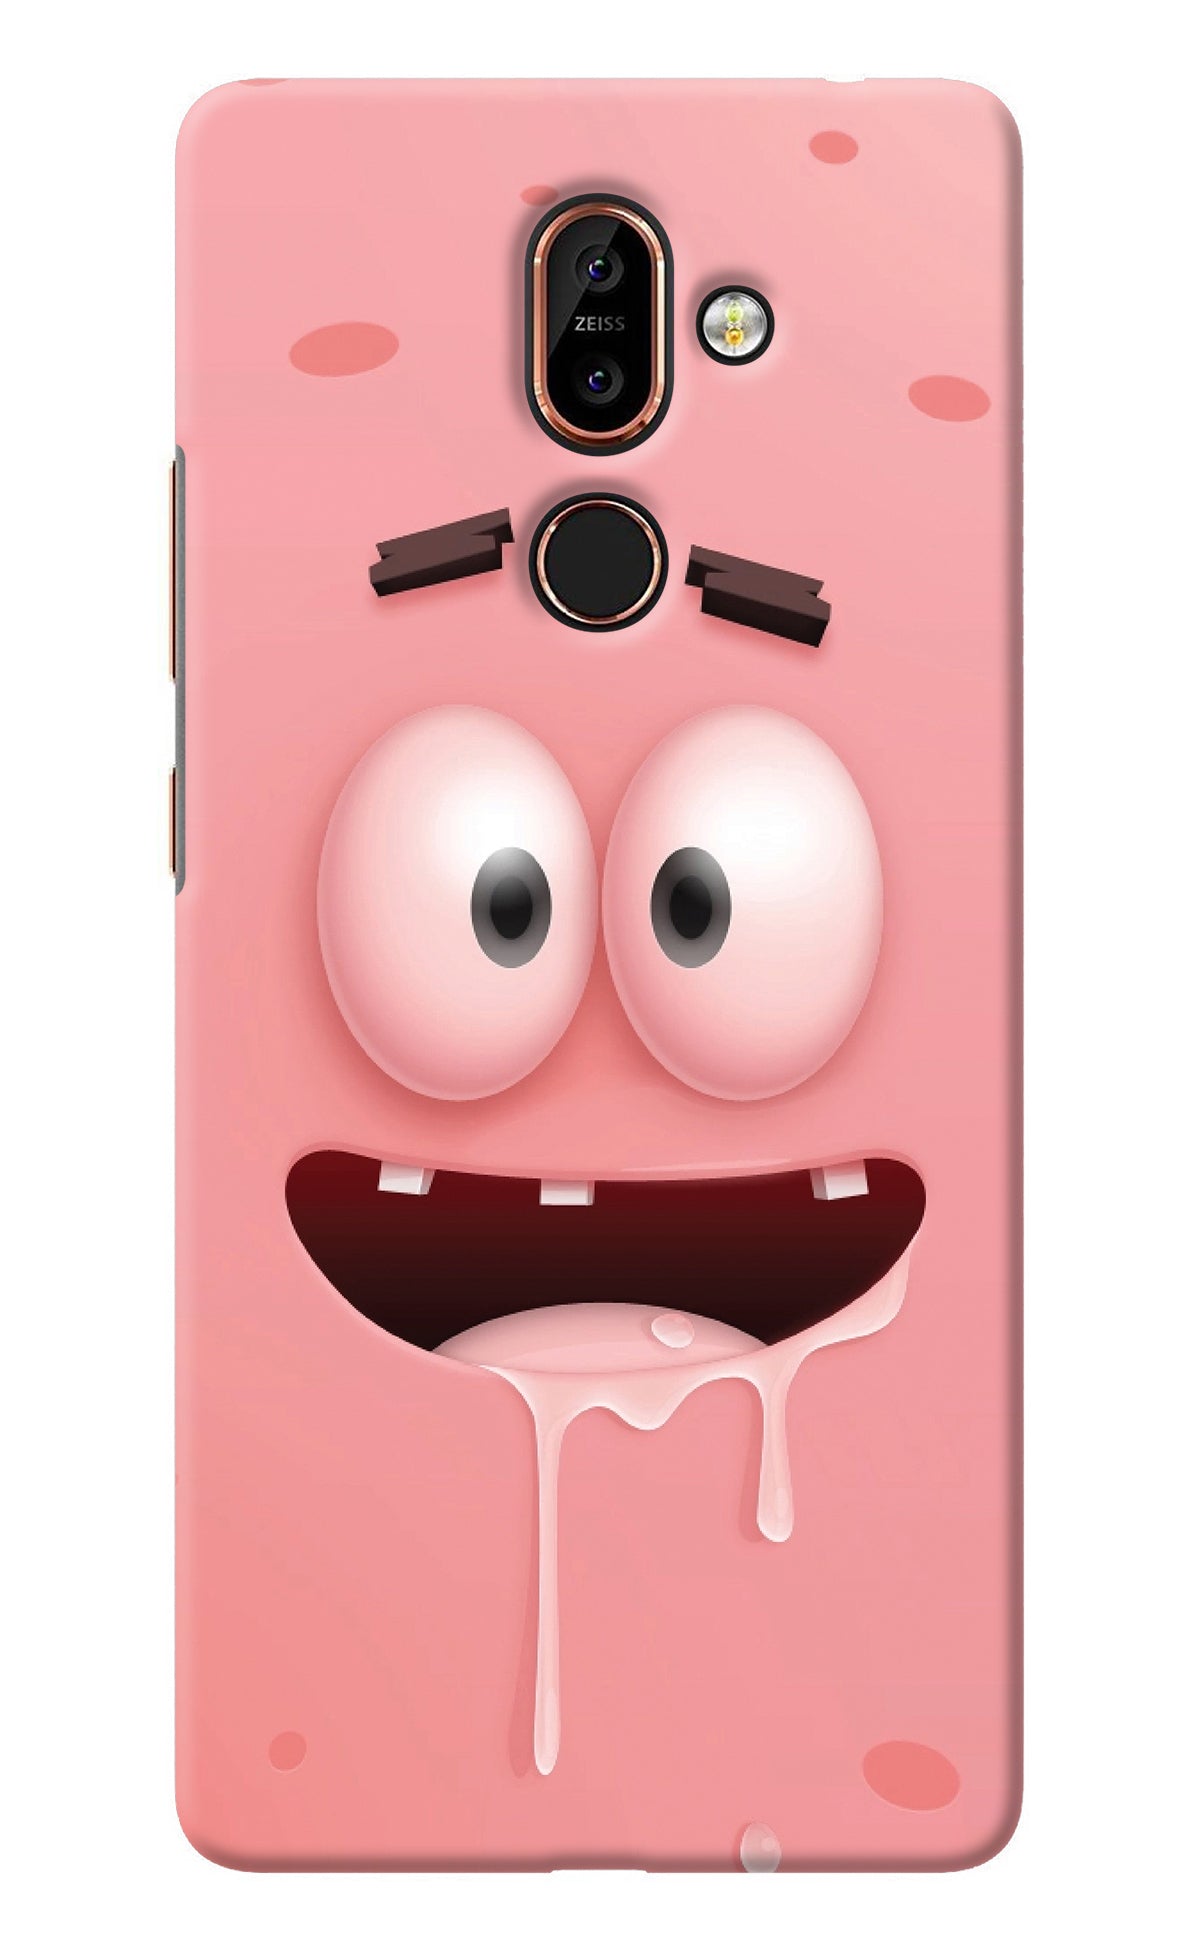 Sponge 2 Nokia 7 Plus Back Cover